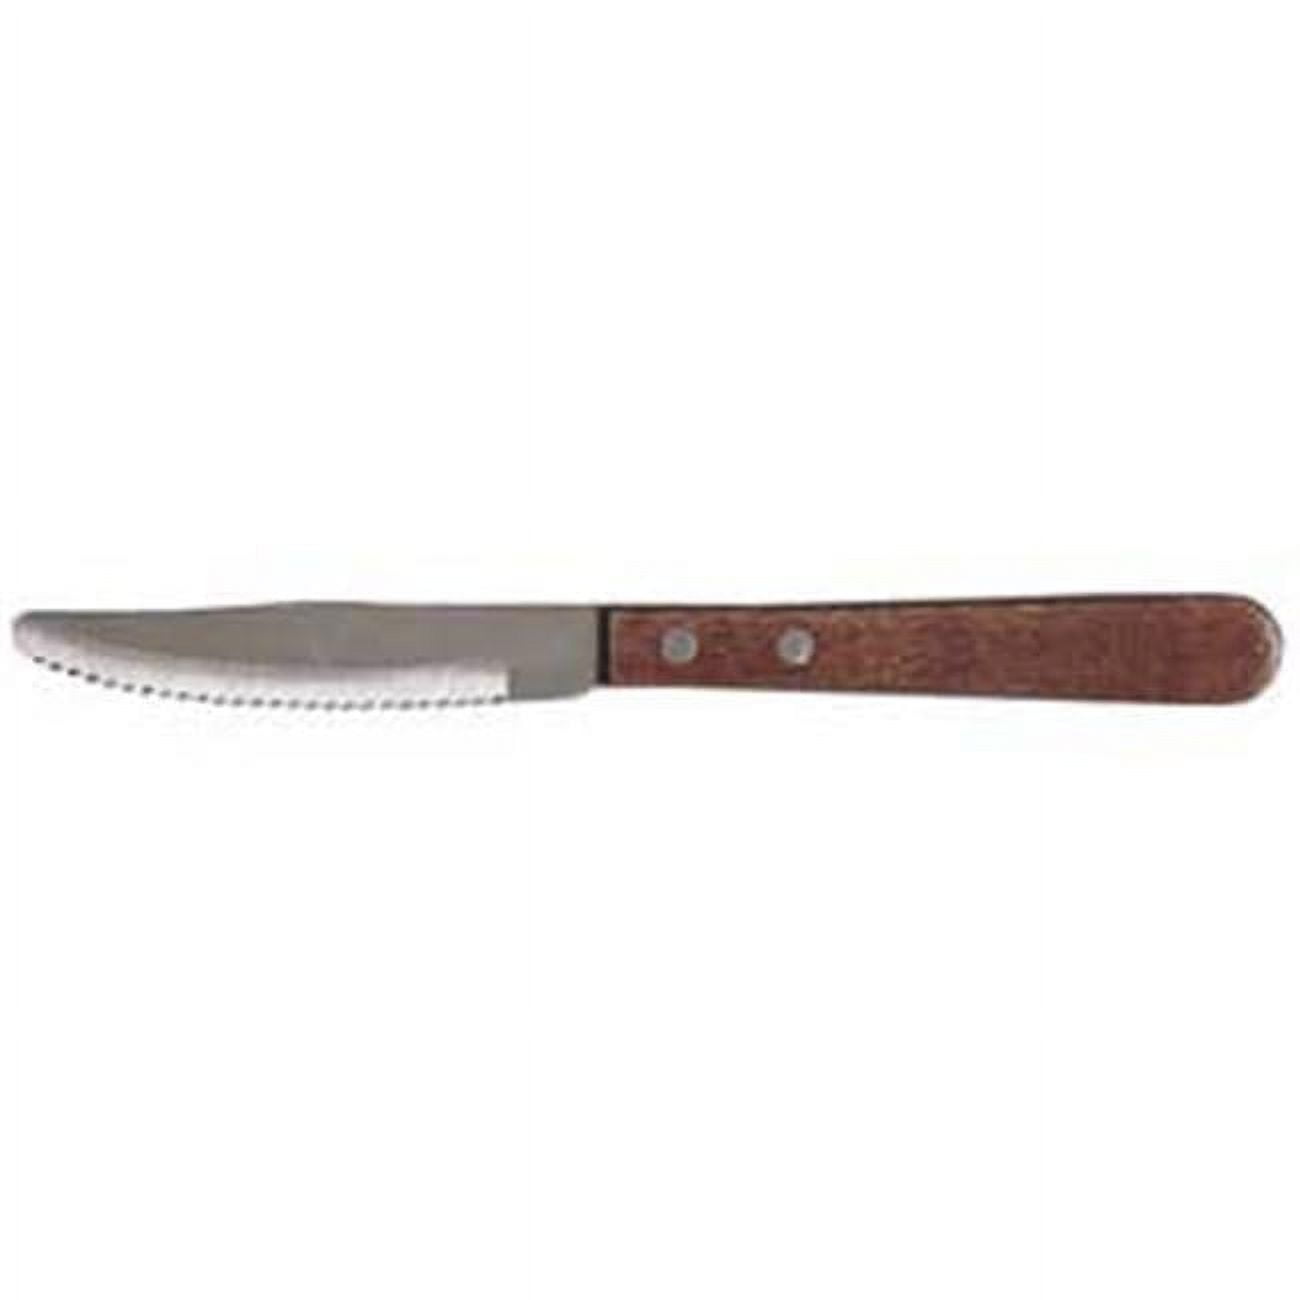 Update International SK-741 - 3 1/2 Steak Knives